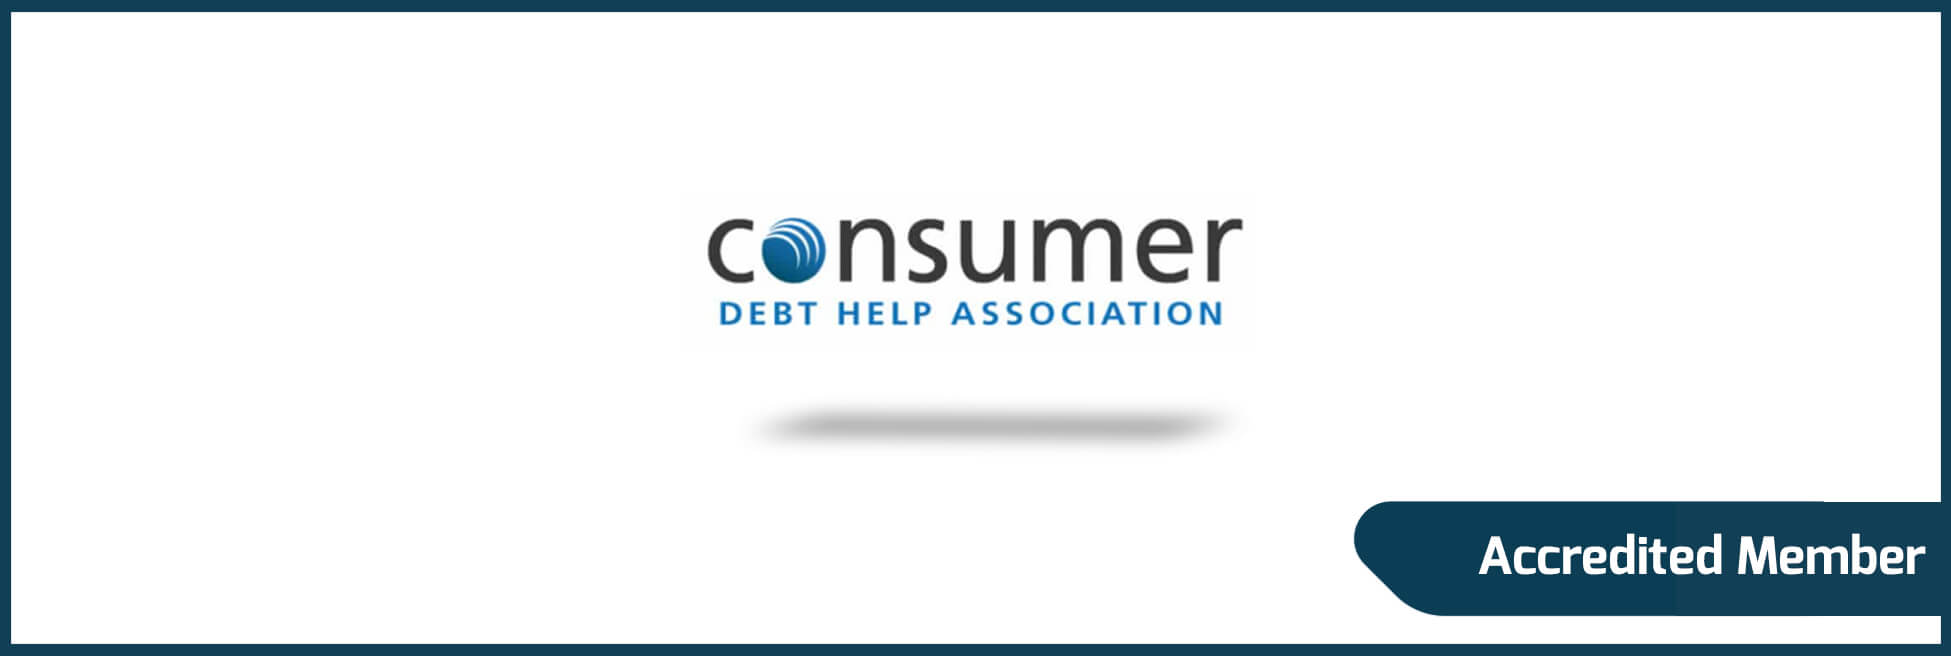 Consumer Debt Help Association